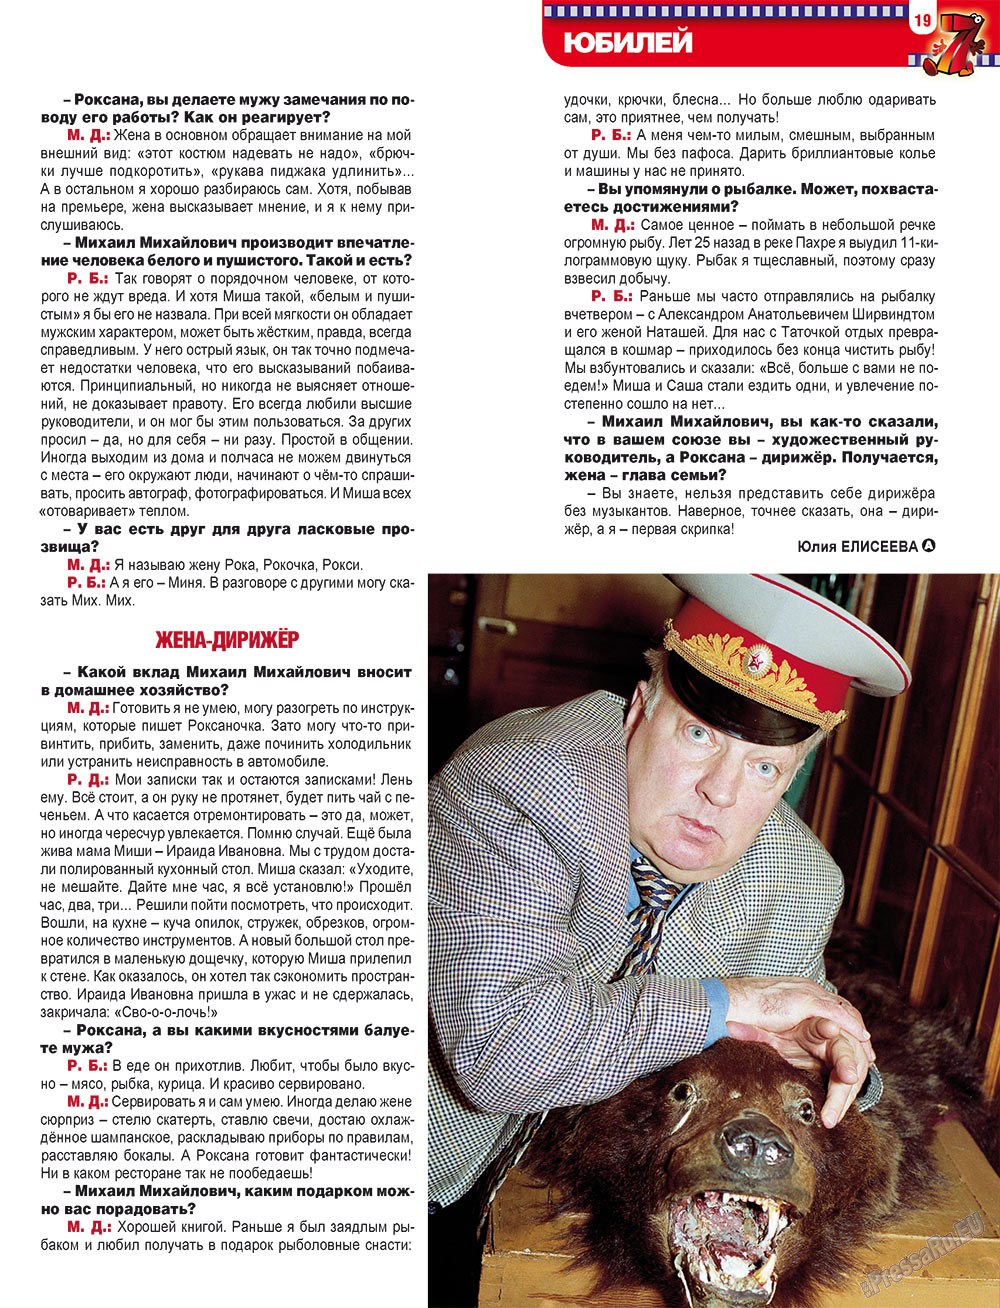 7плюс7я (журнал). 2011 год, номер 25, стр. 19